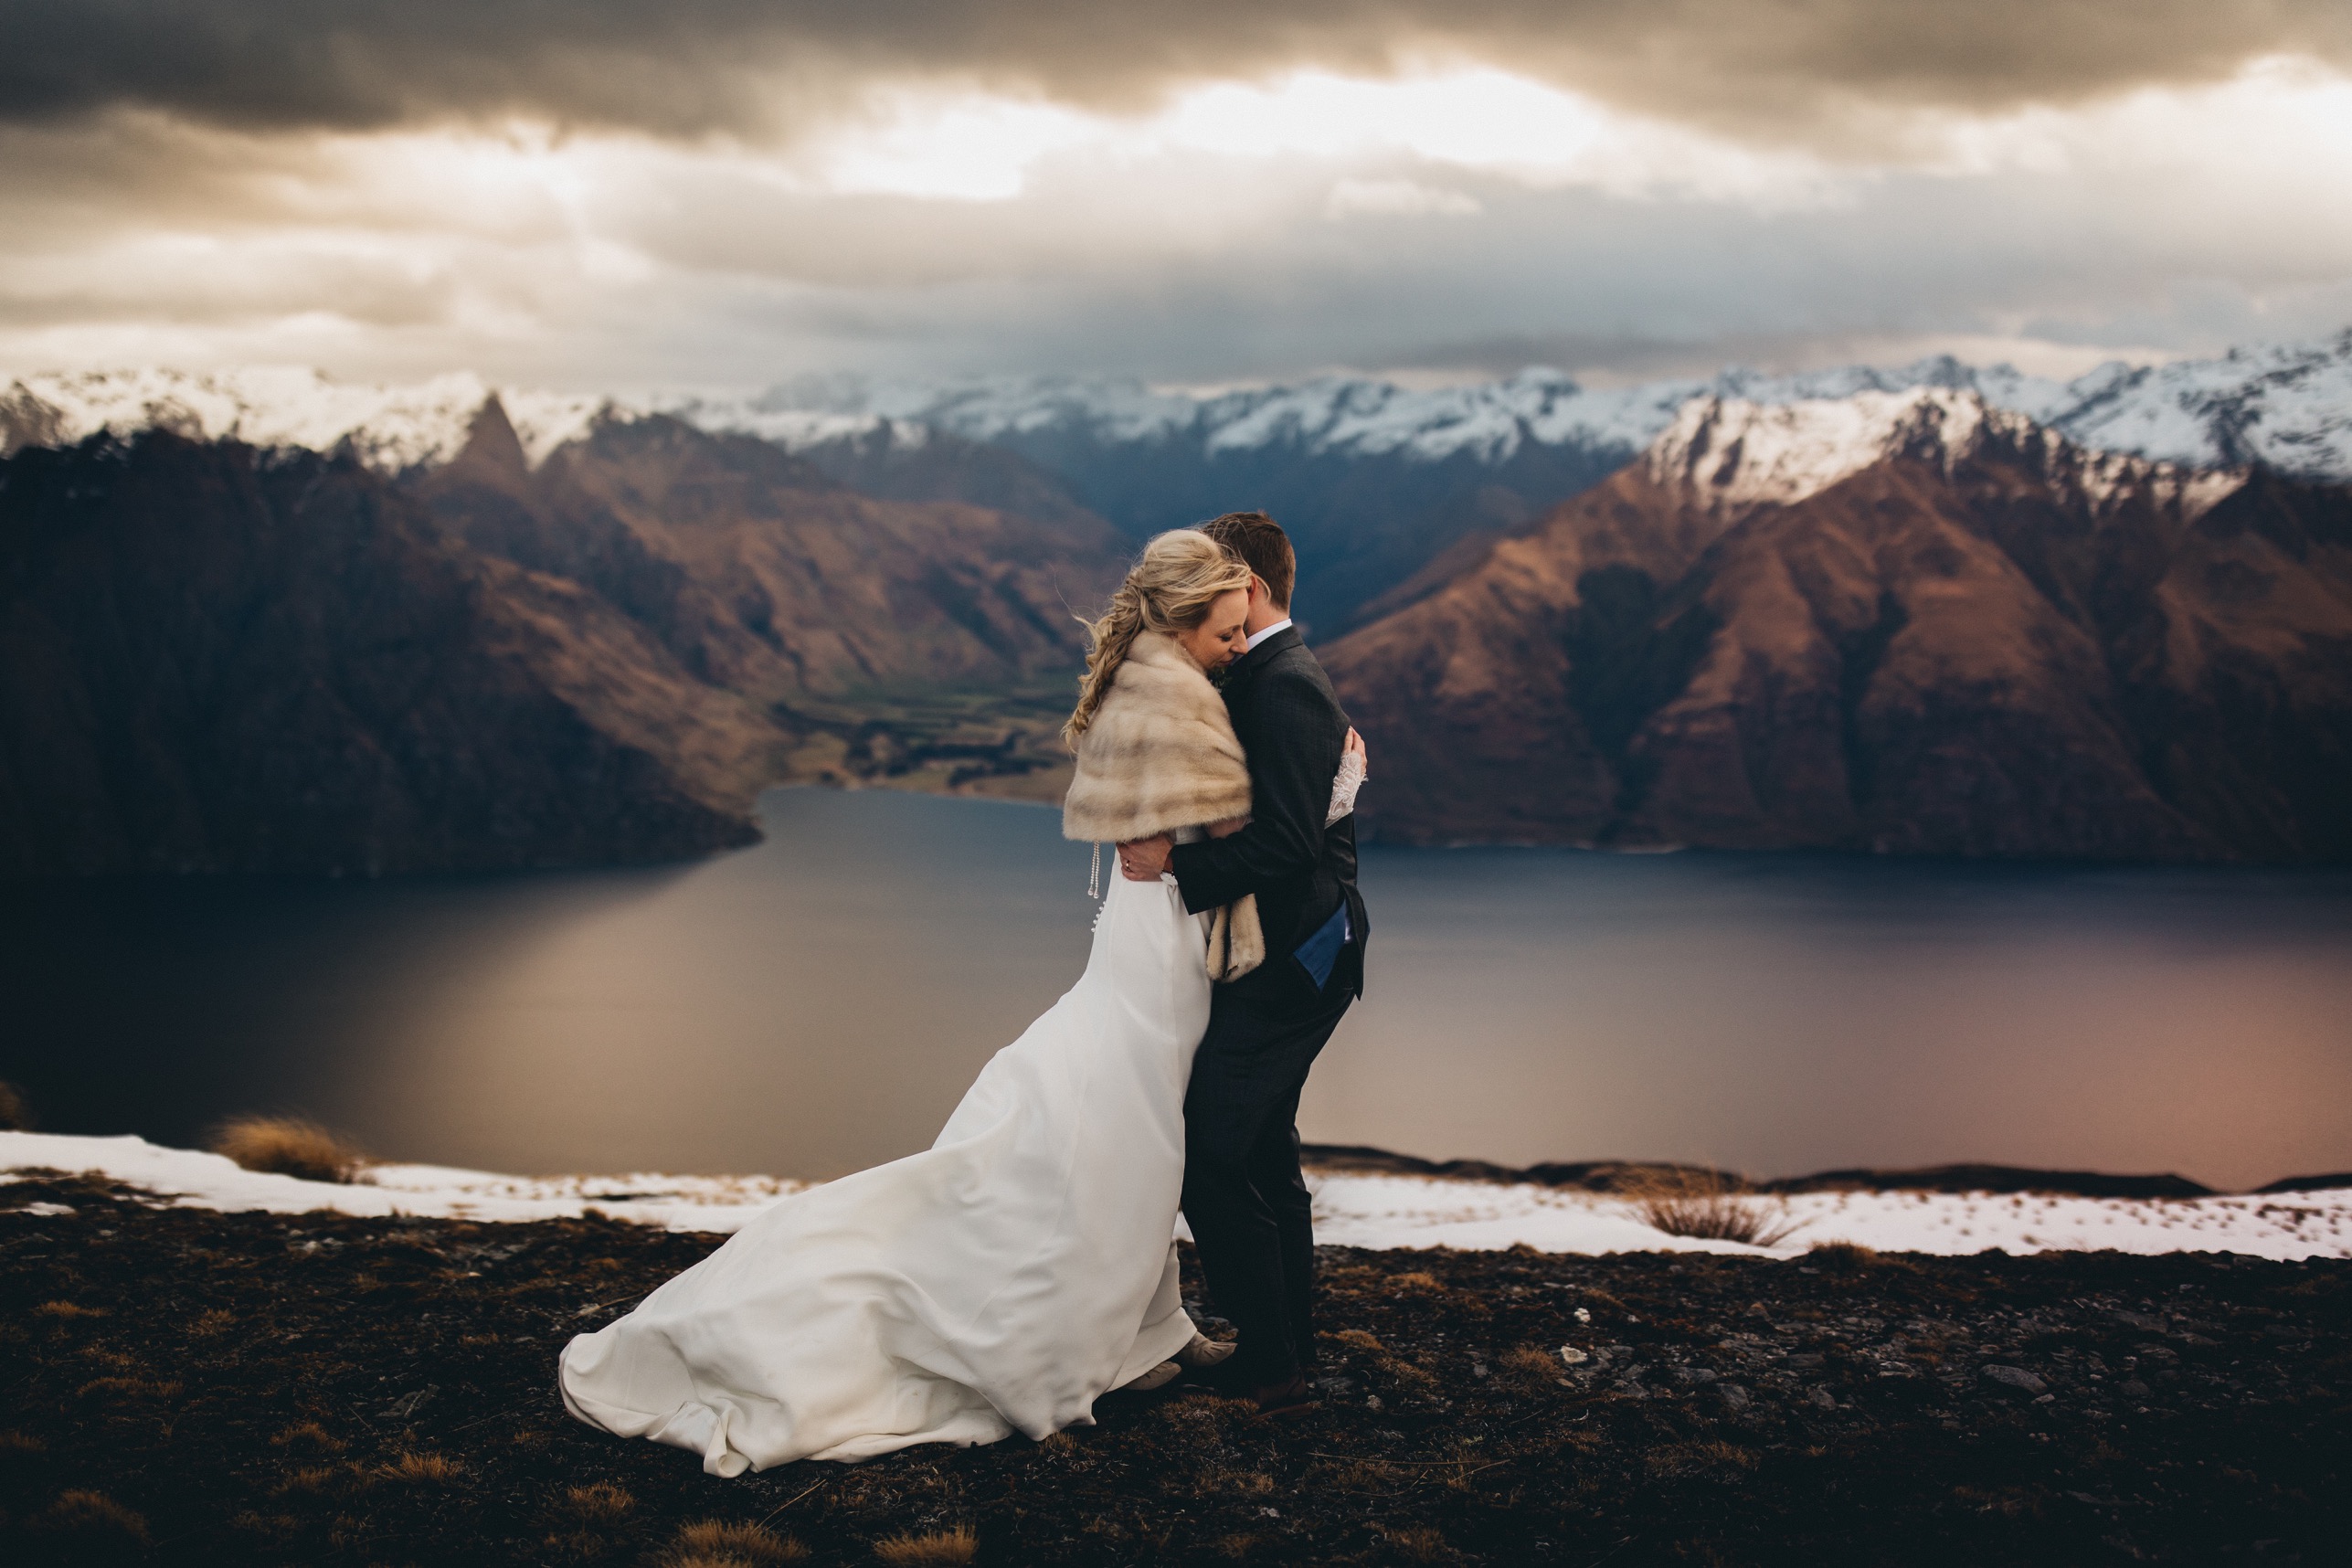 Epic destination wedding with heli mountaintop photos